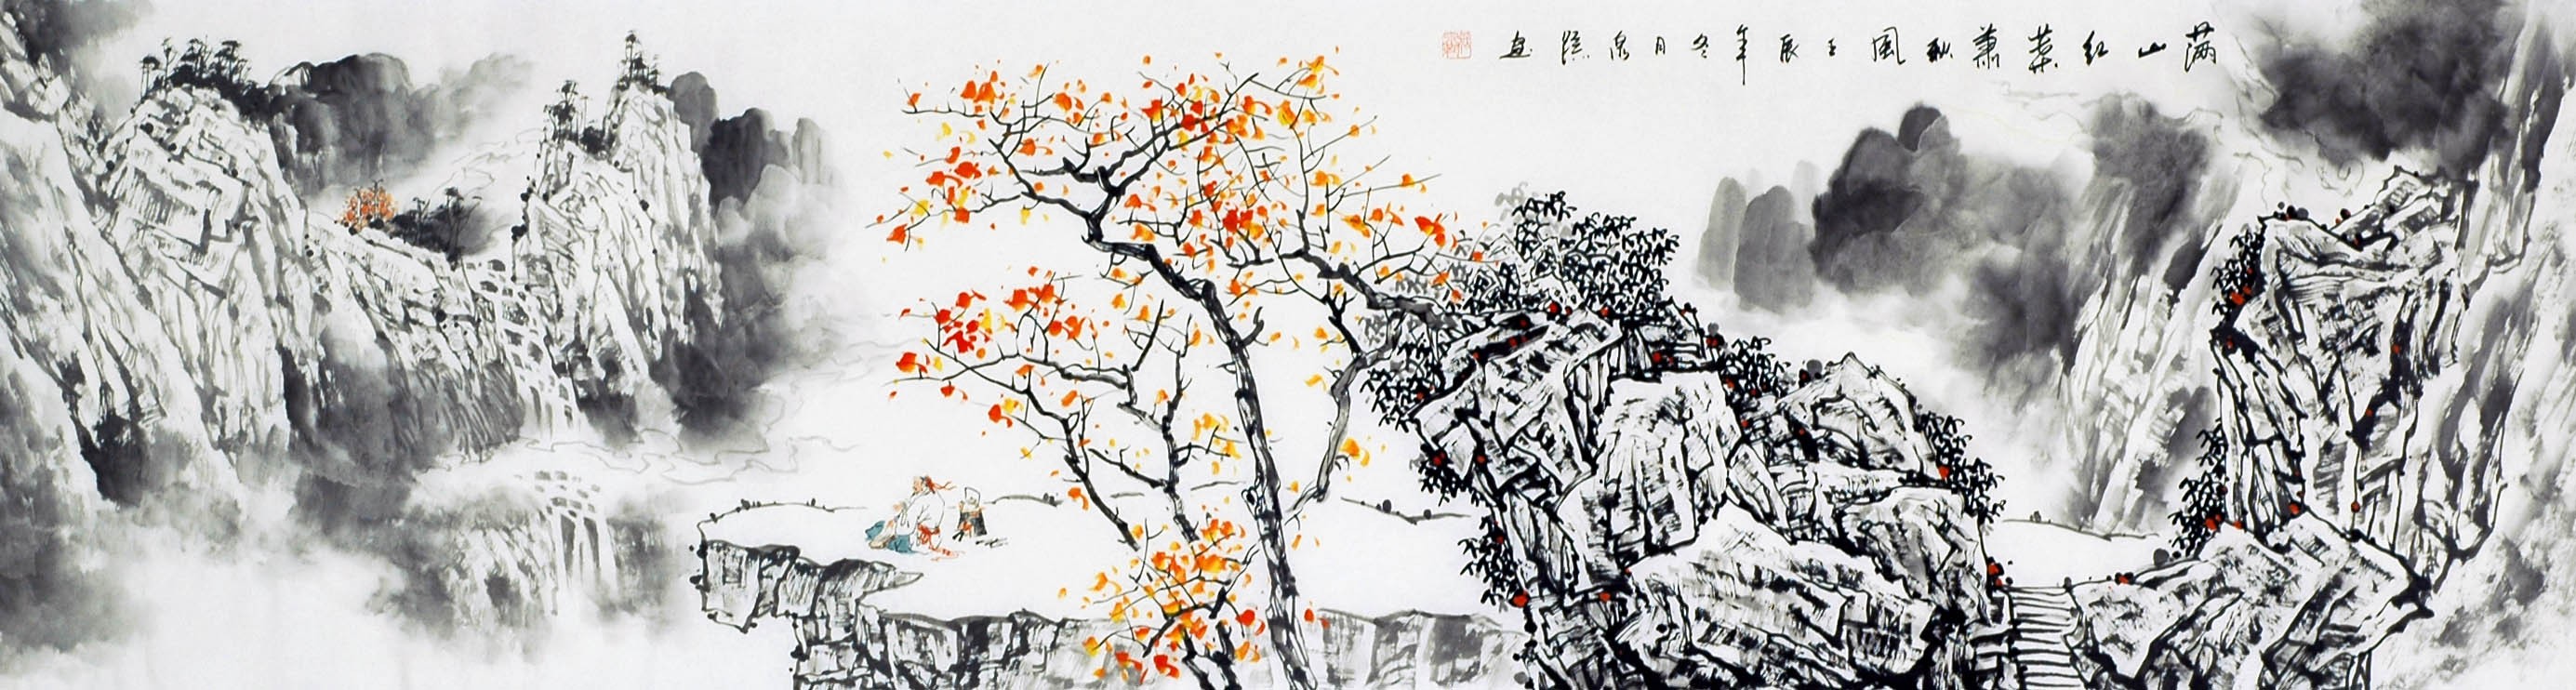 Chinese Aquarene Painting - CNAG010342